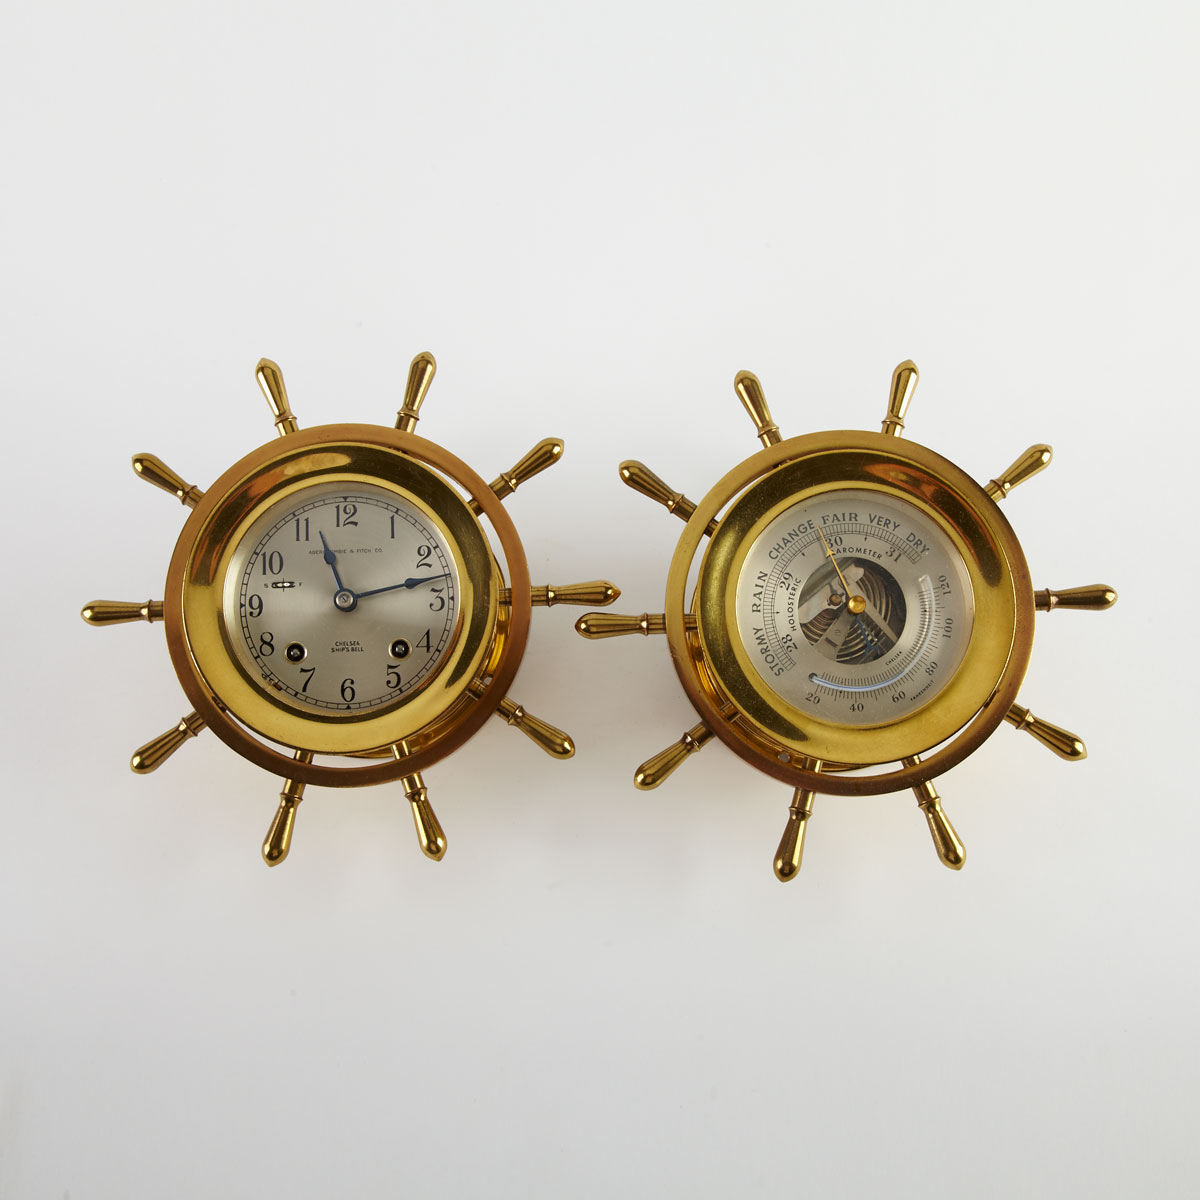 Brass Ship s Clock and Barometer 17a21e